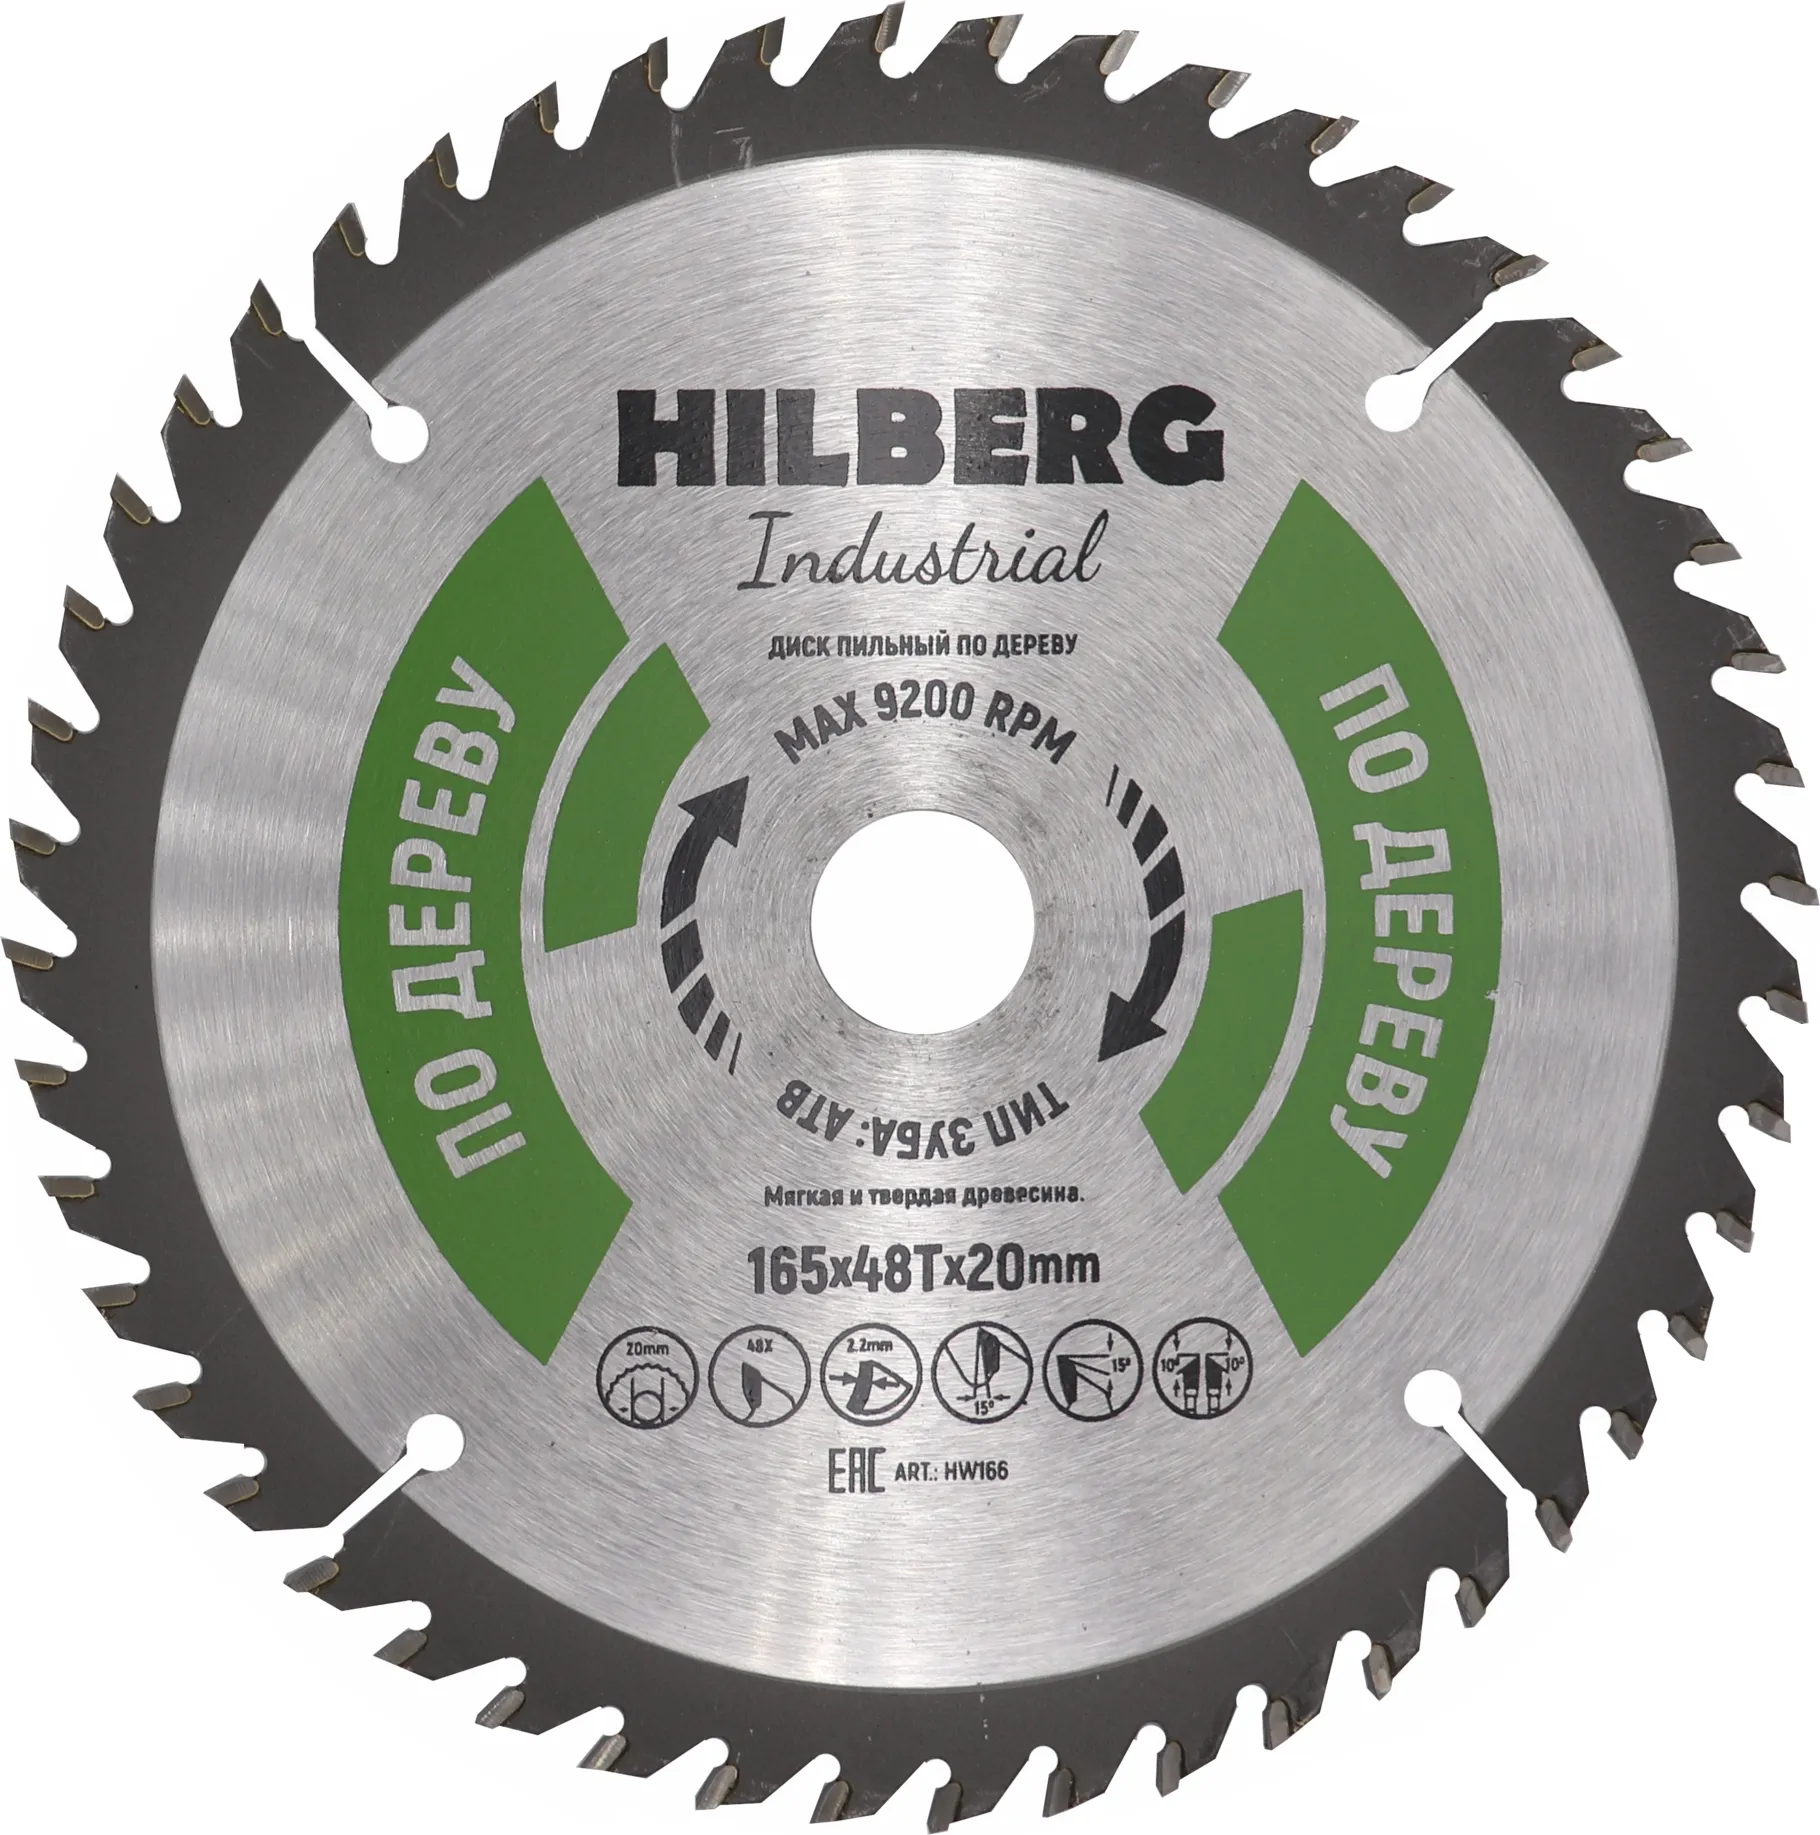 Диск пильный по дереву 165х48Tx20мм Hilberg Industrial HW166